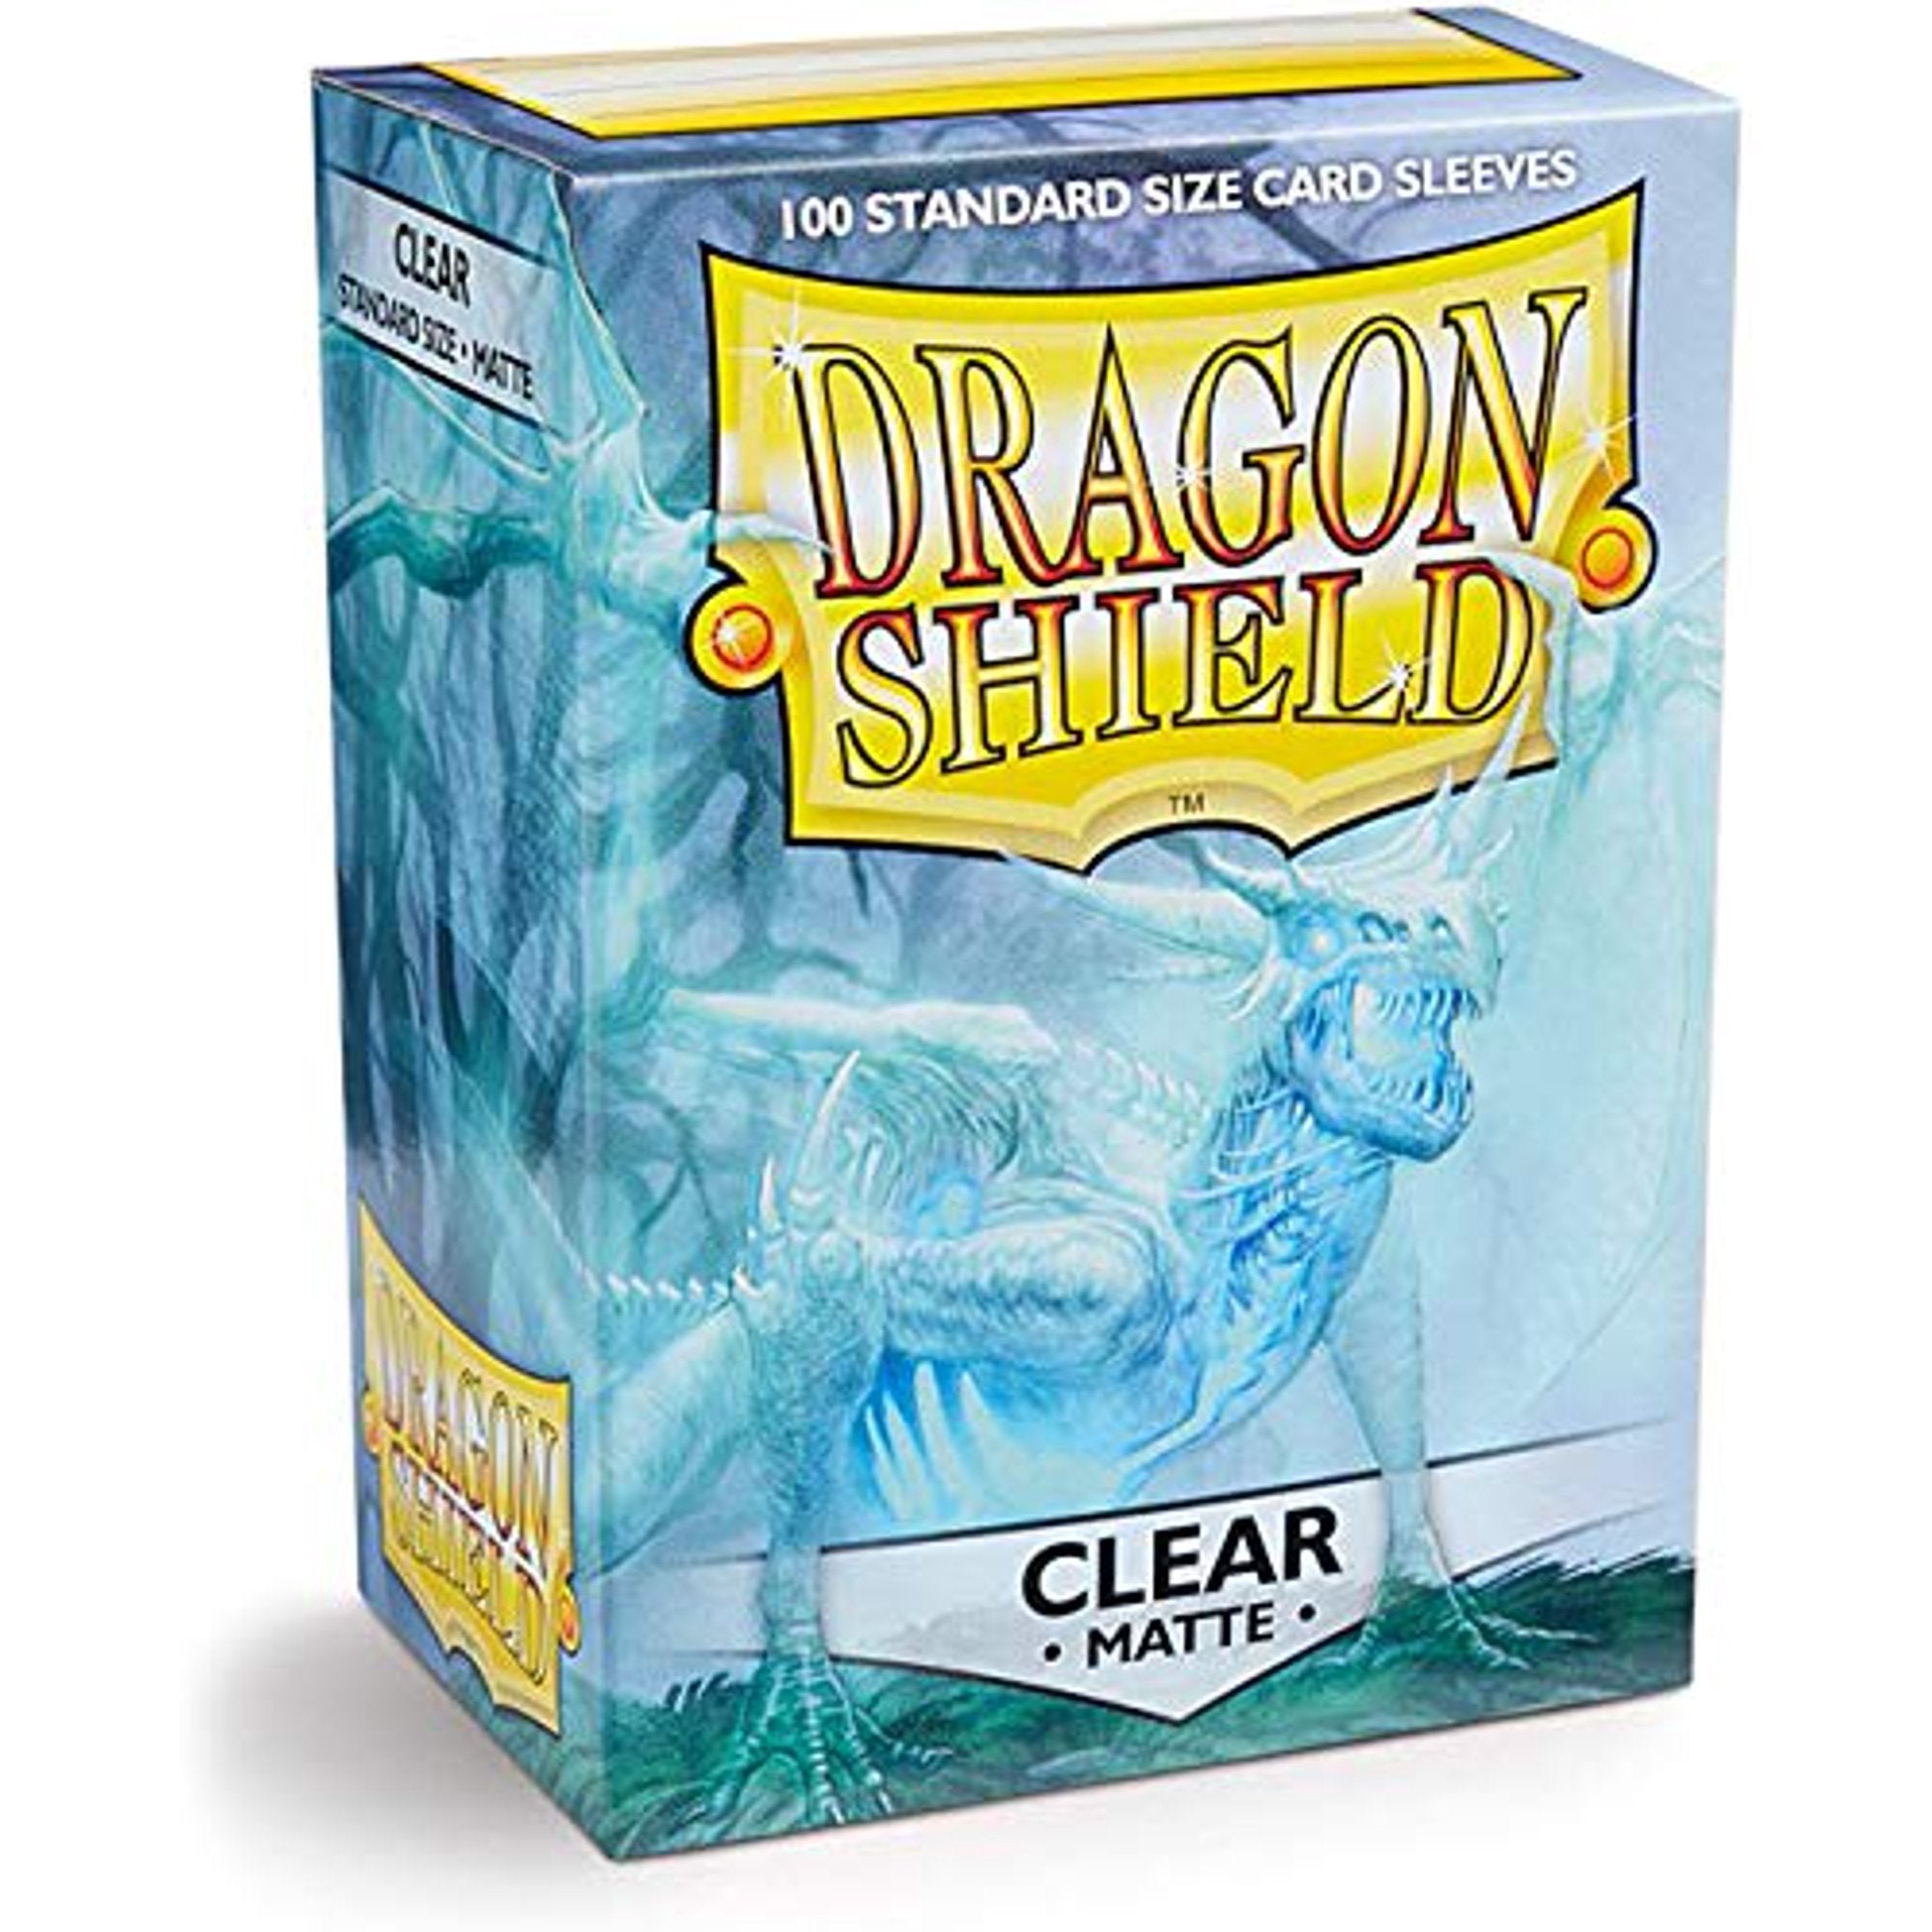 Dragon Shield Card Sleeves - Clear (Matte)